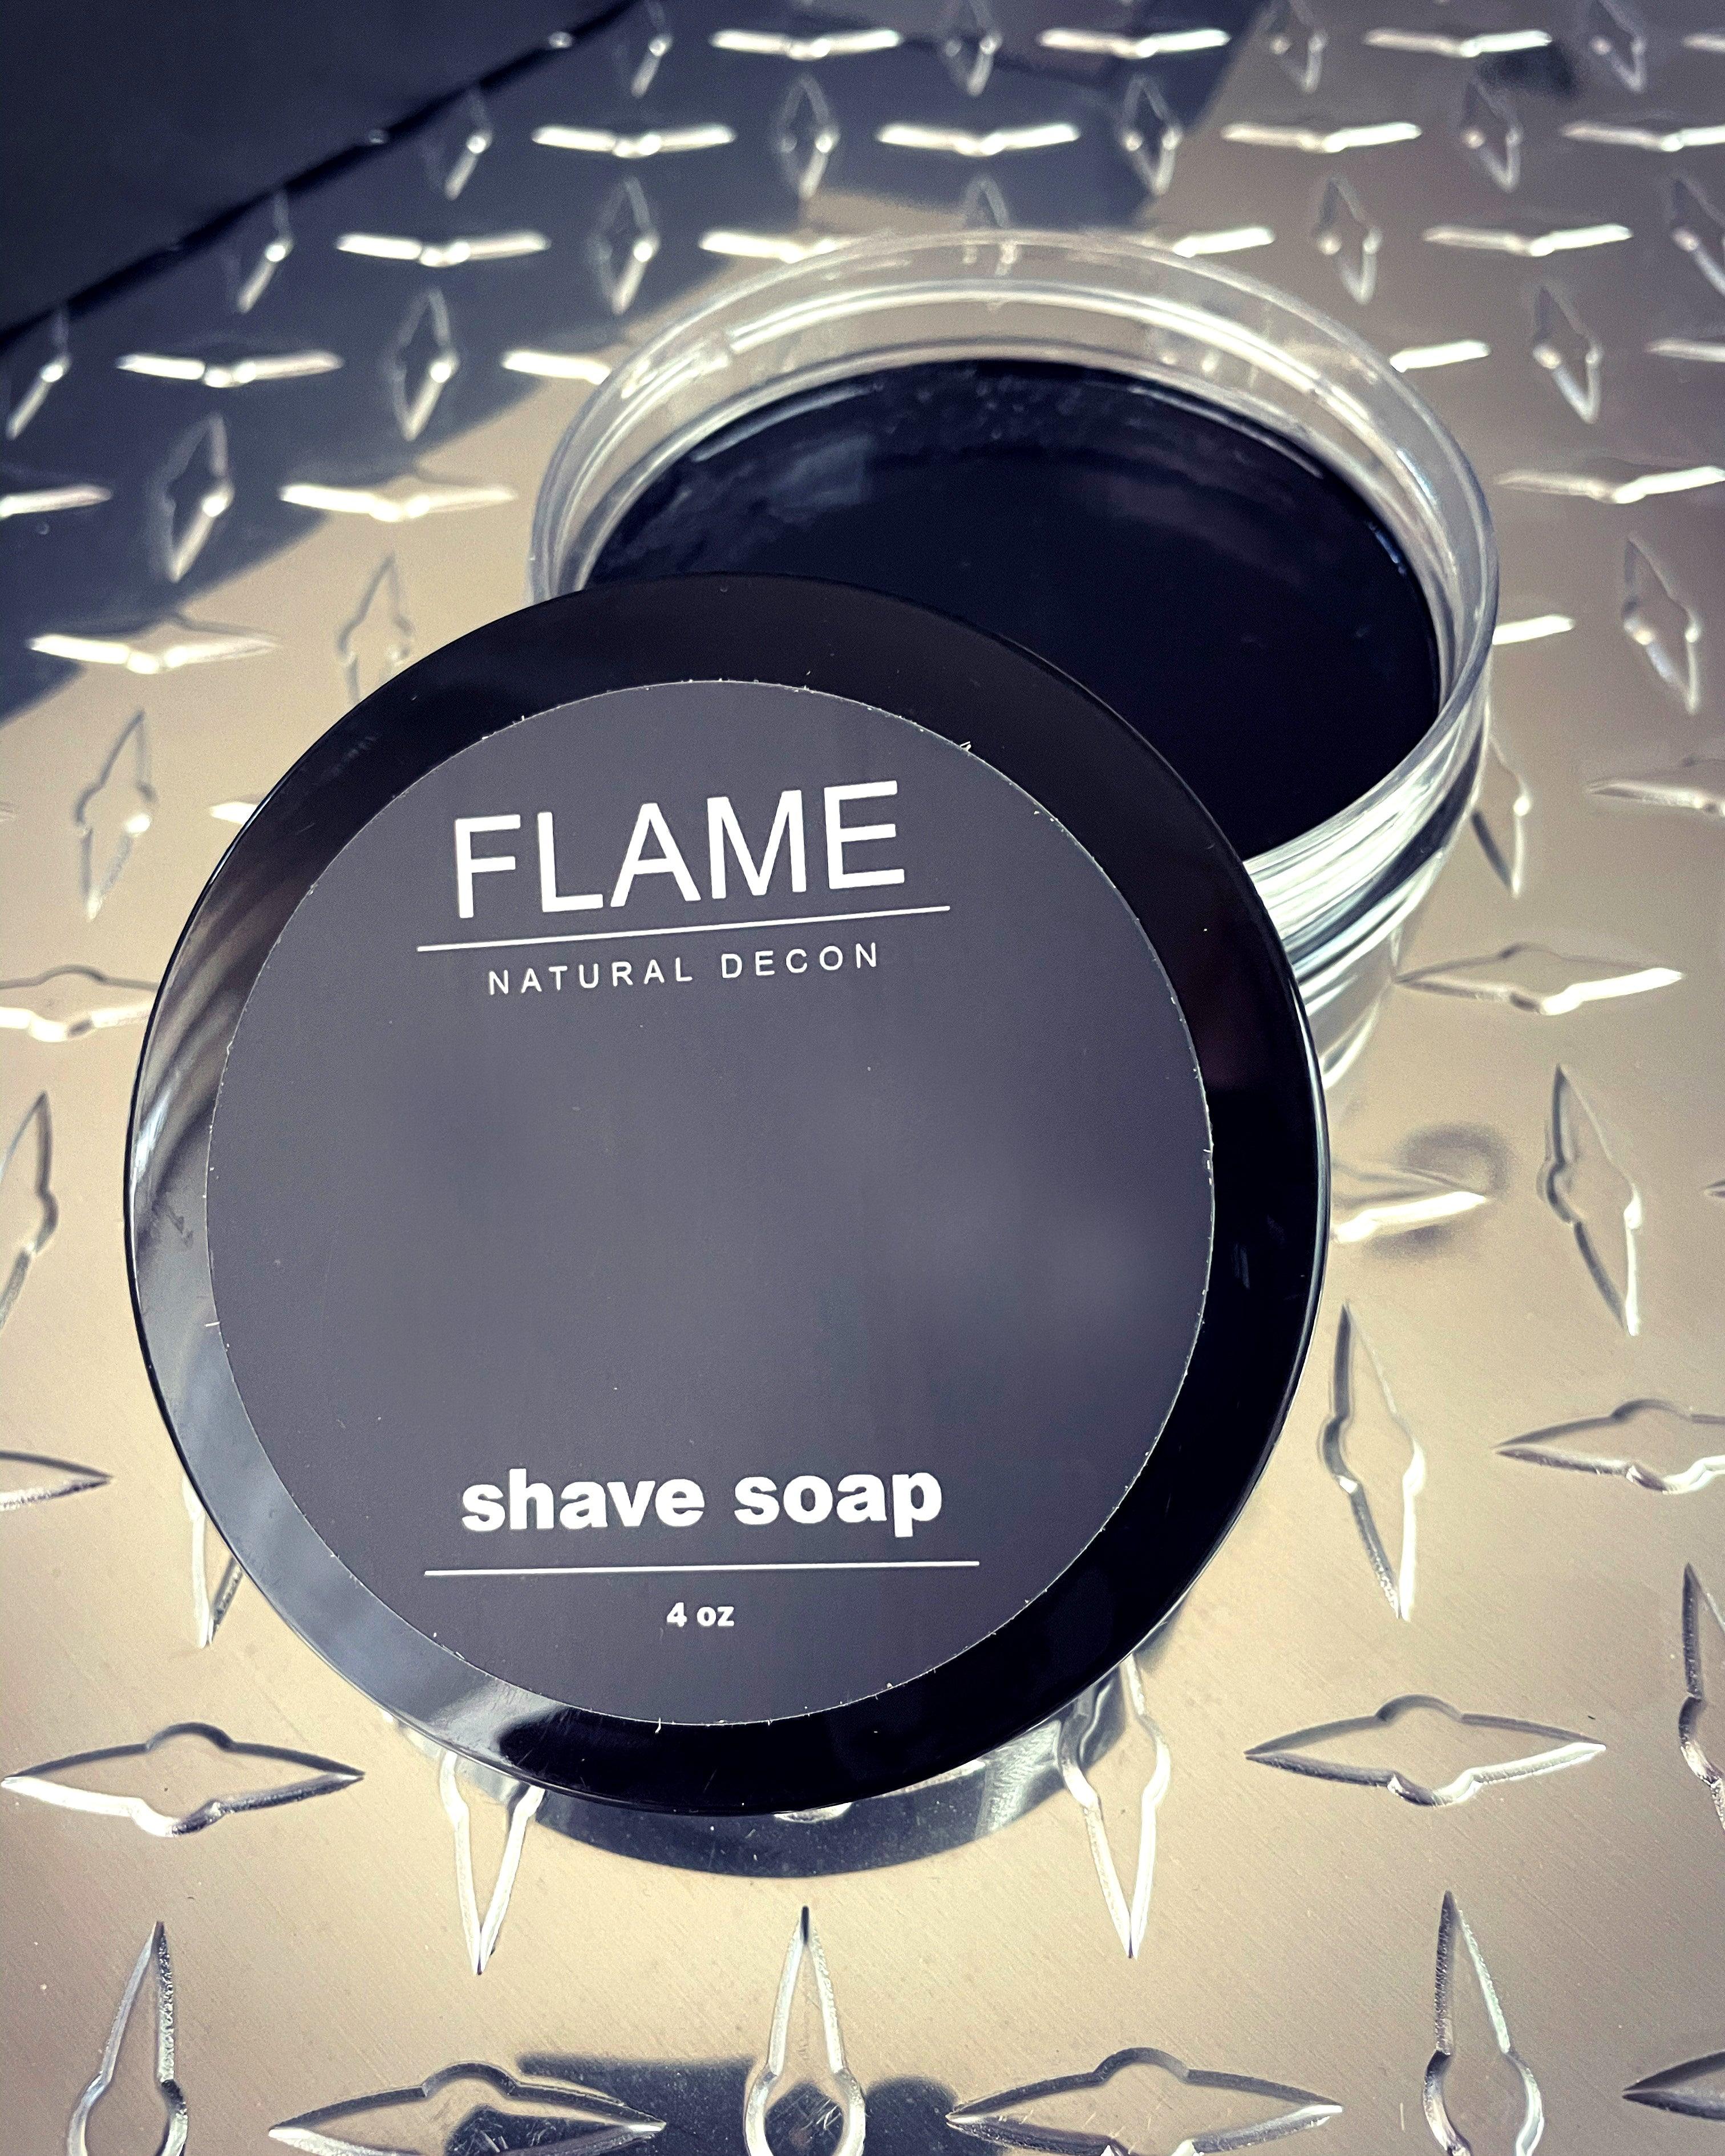 FLAME Natural Decon Shave Soap